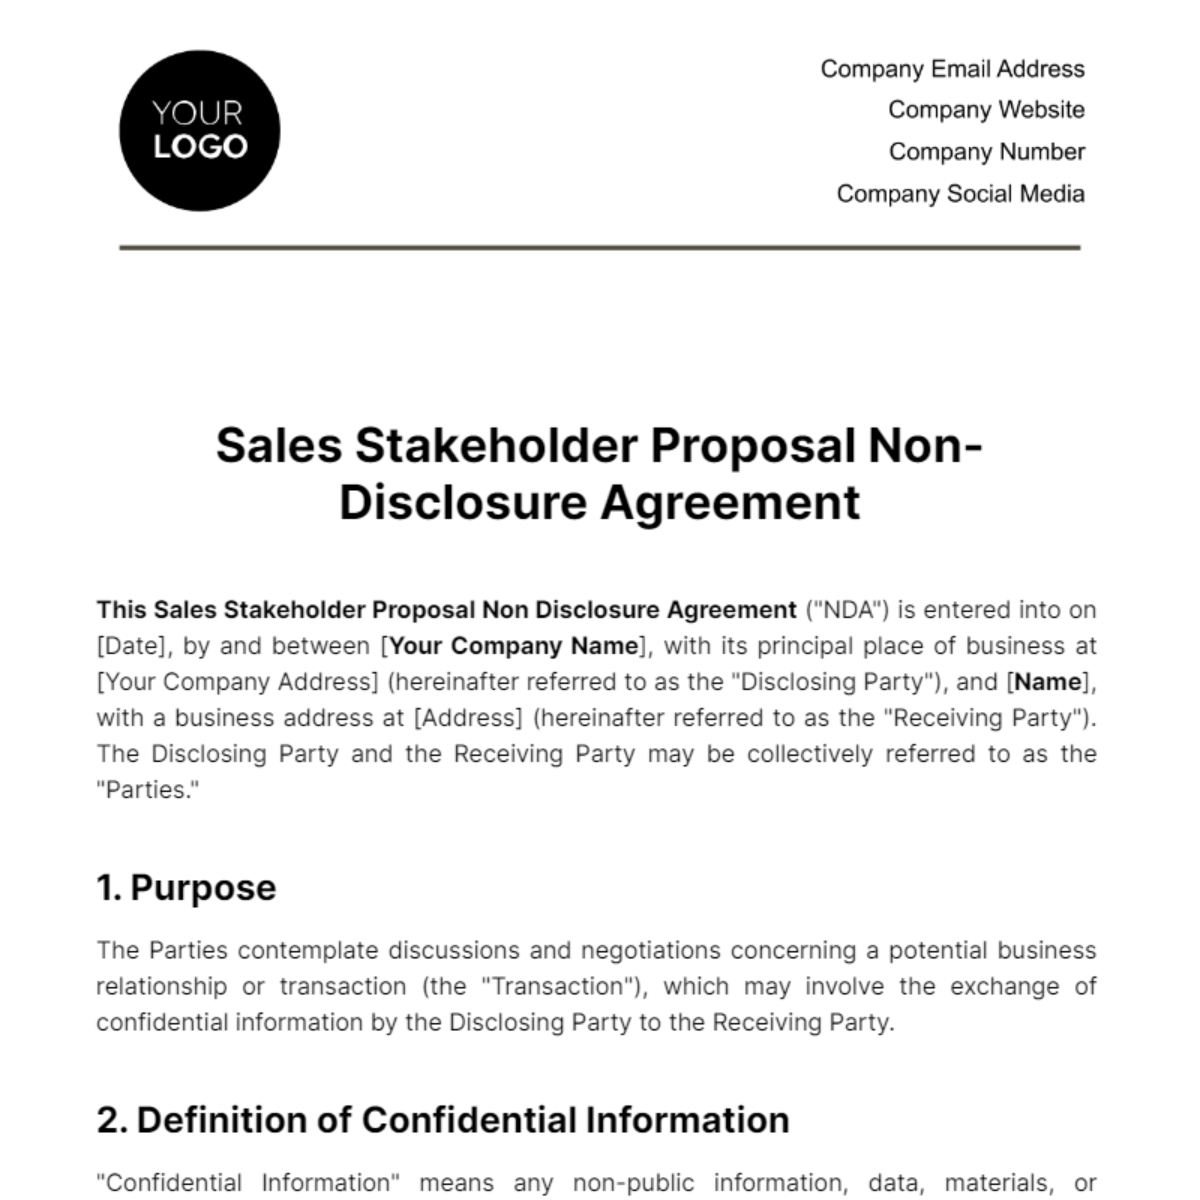 Sales Stakeholder Proposal NDA Template